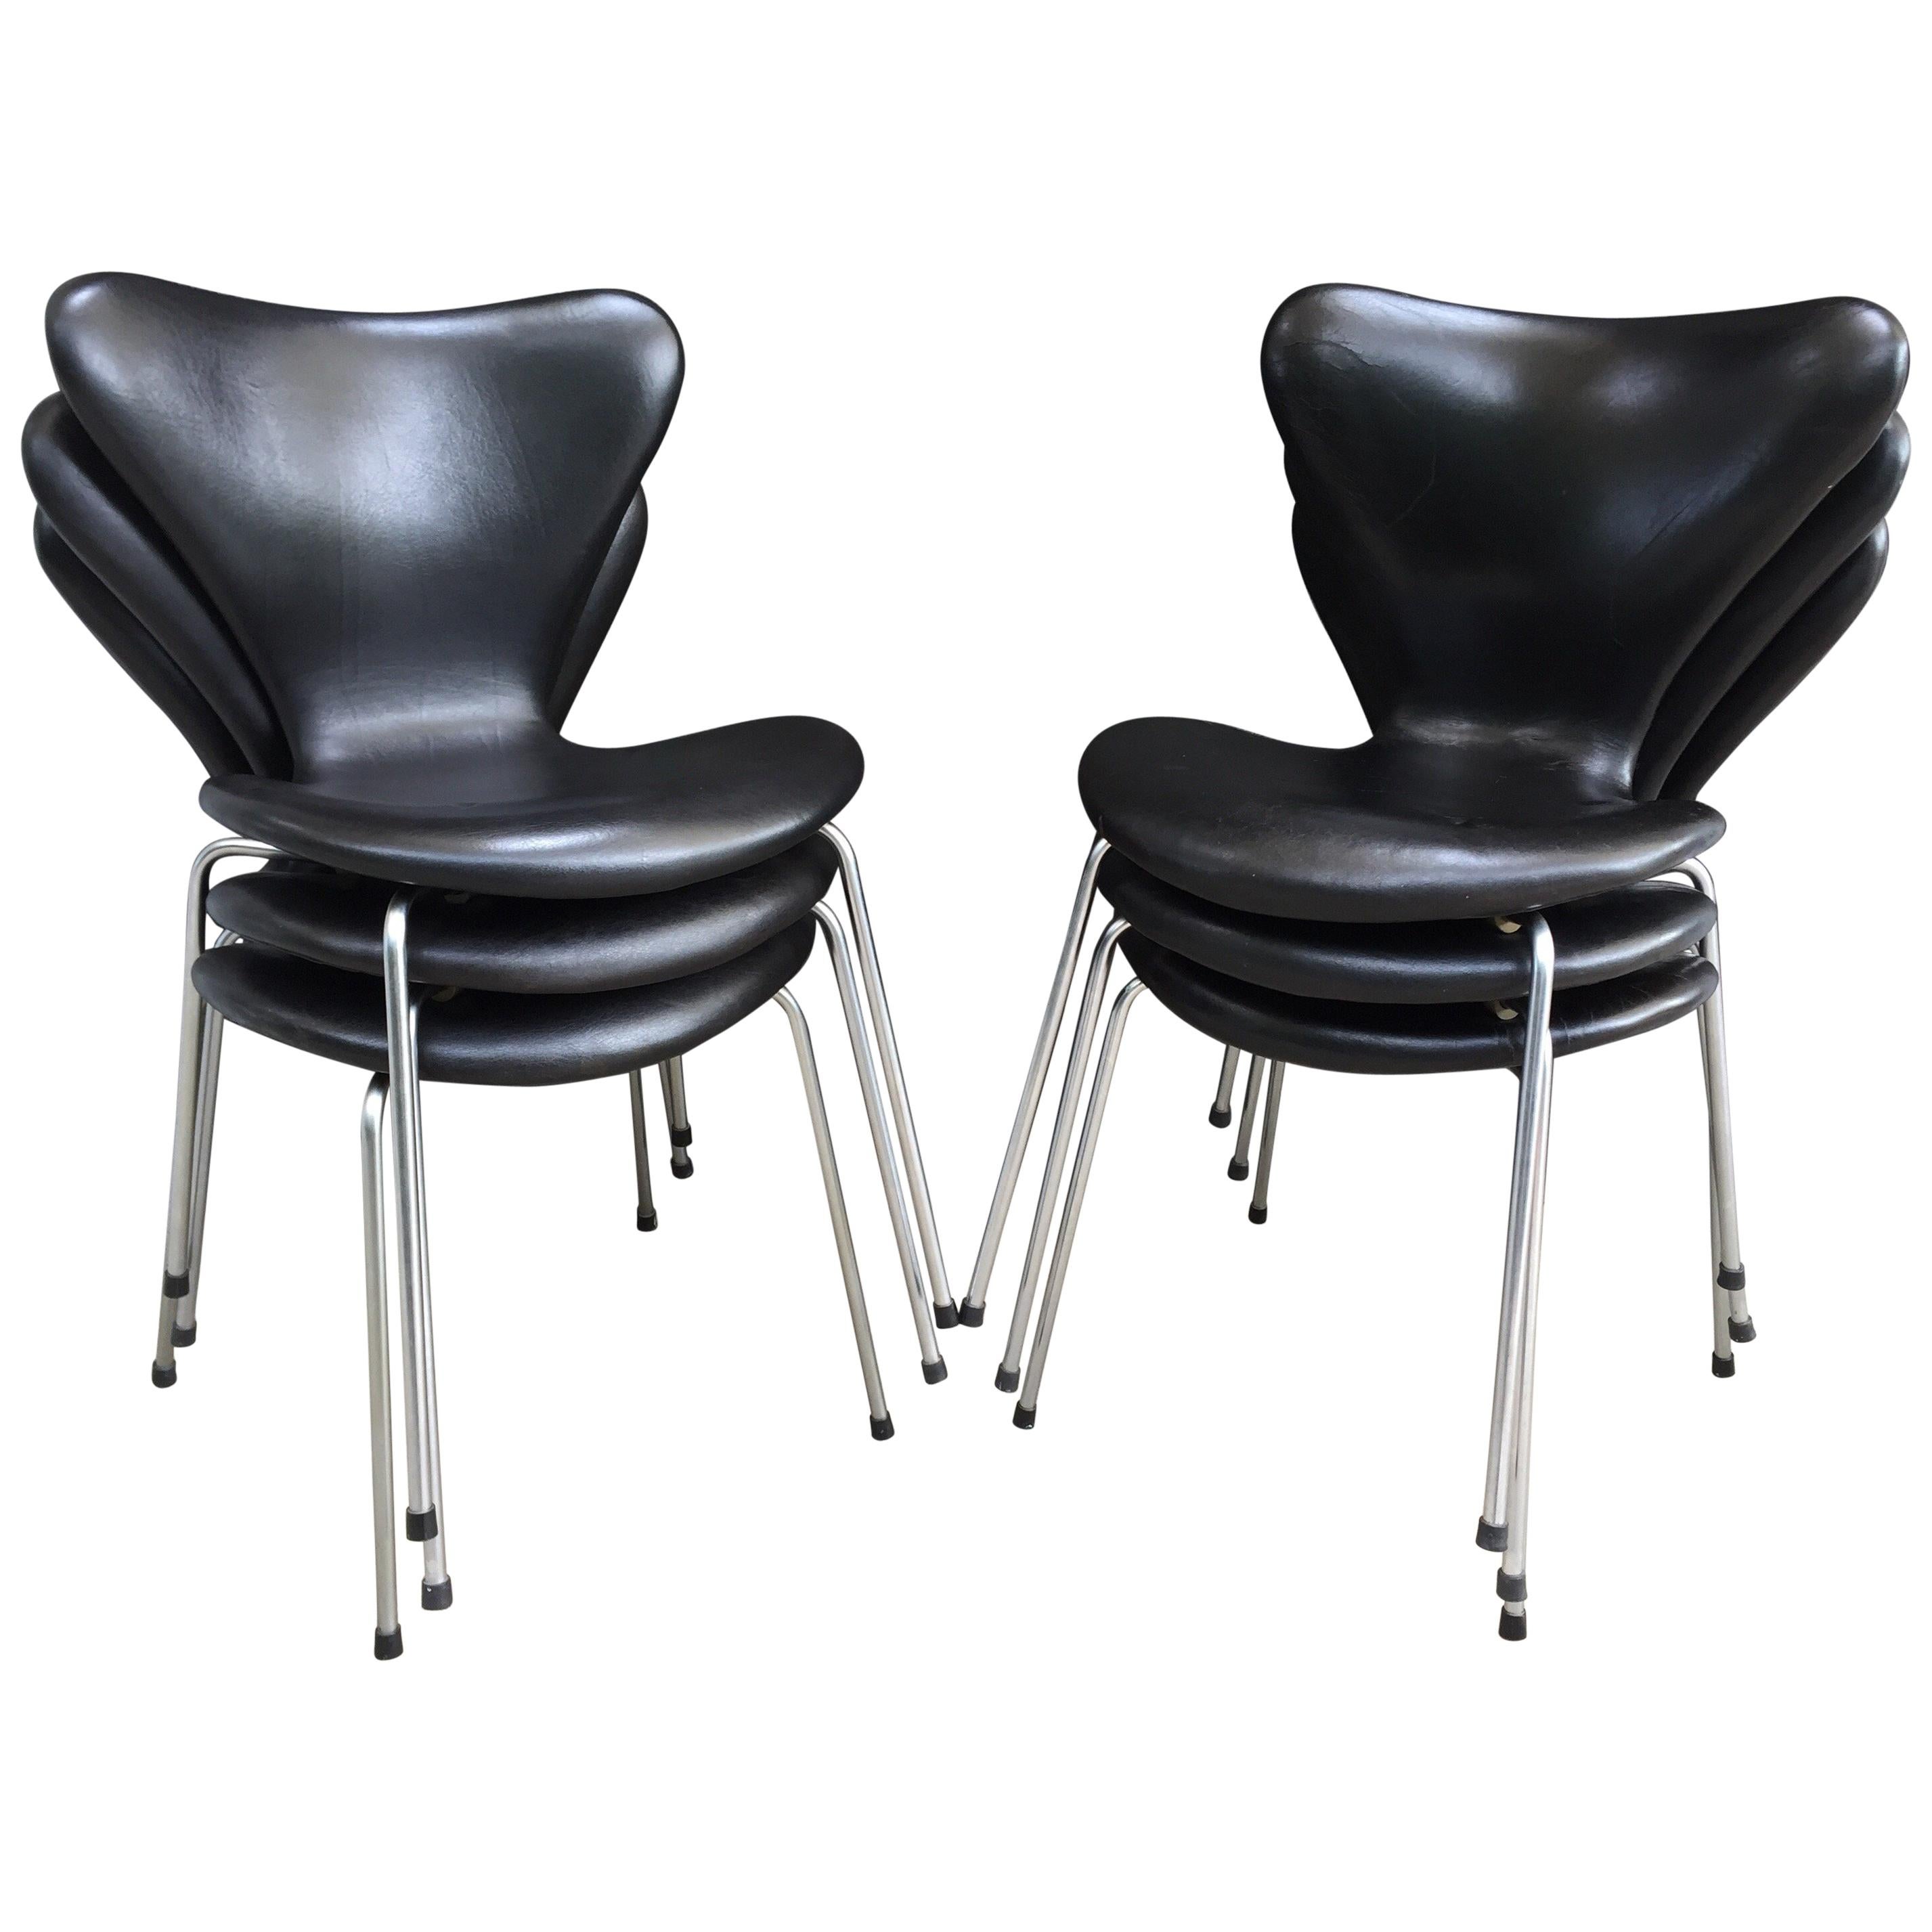 Arne Jacobsen 3107 Chair Designed in 1955 in Original Black Leather